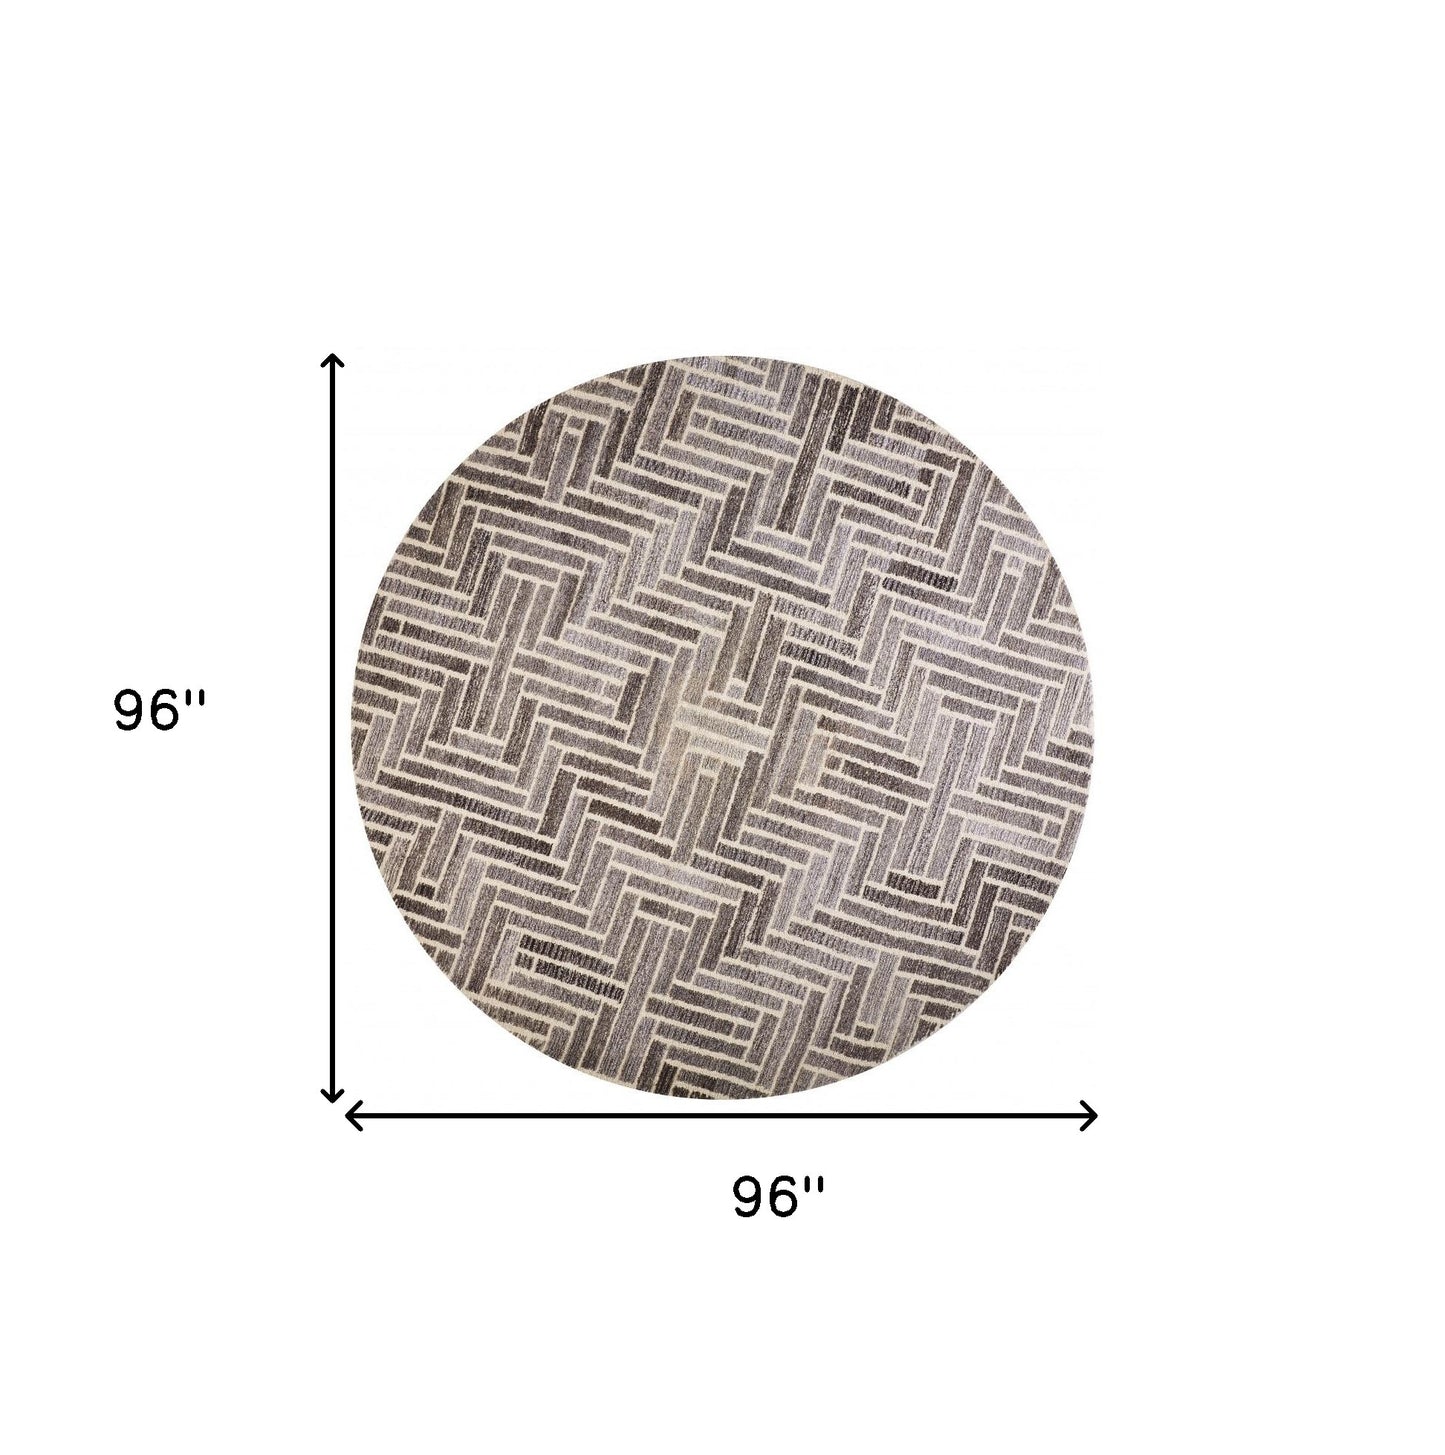 8' X 10' Taupe Gray And Tan Wool Geometric Tufted Handmade Area Rug